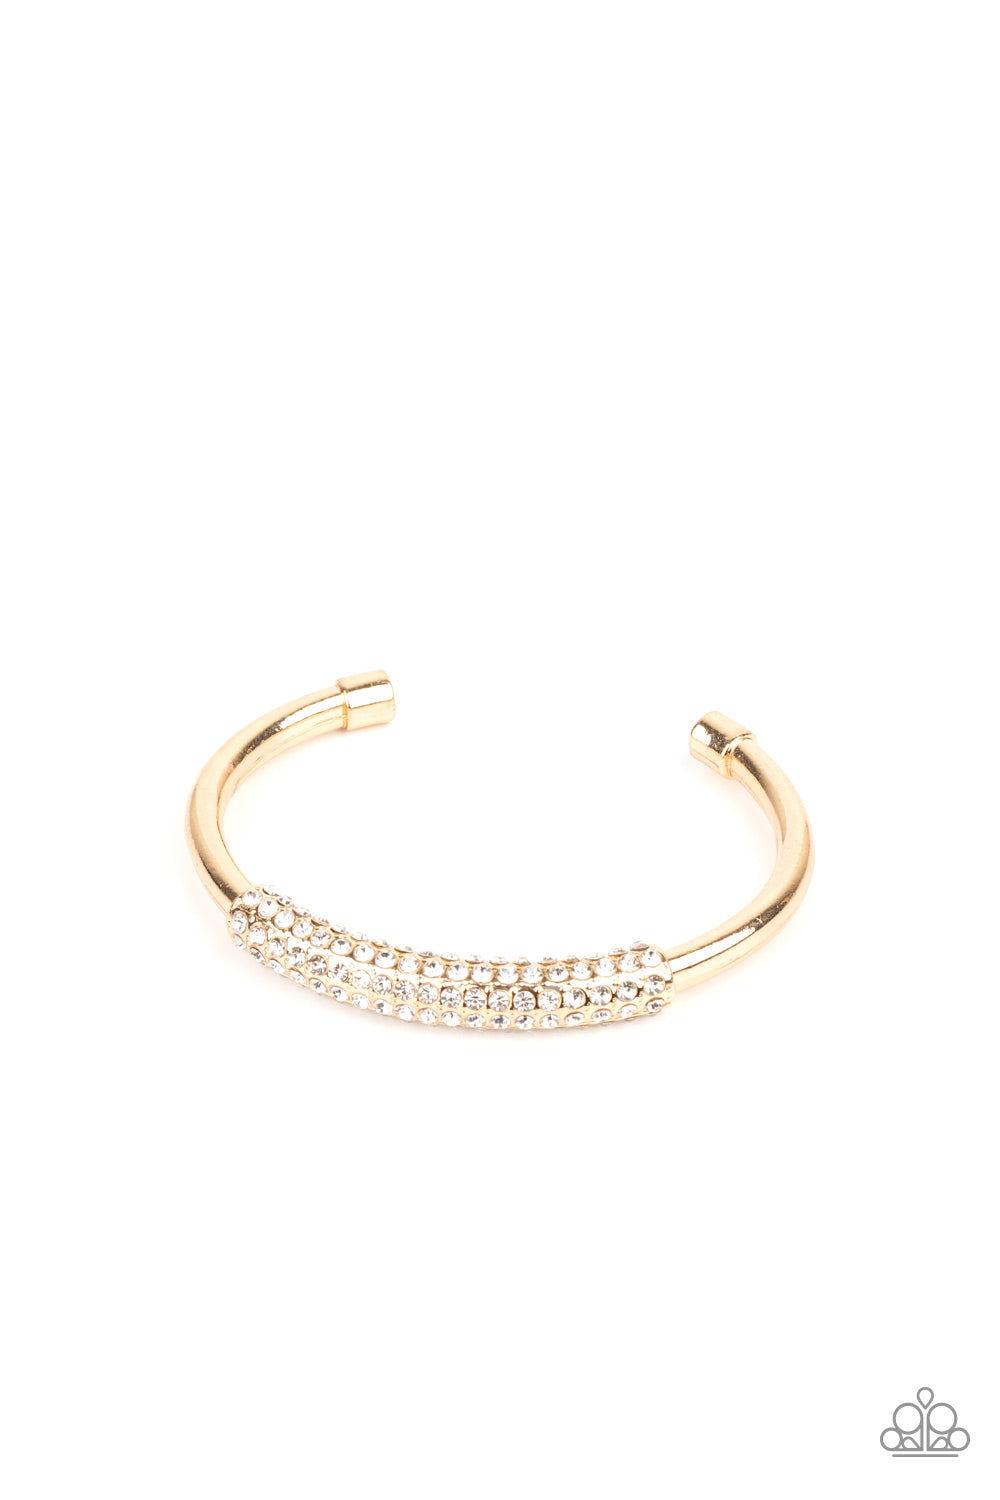 Day to Day Dazzle - Gold cuff bracelet 2061